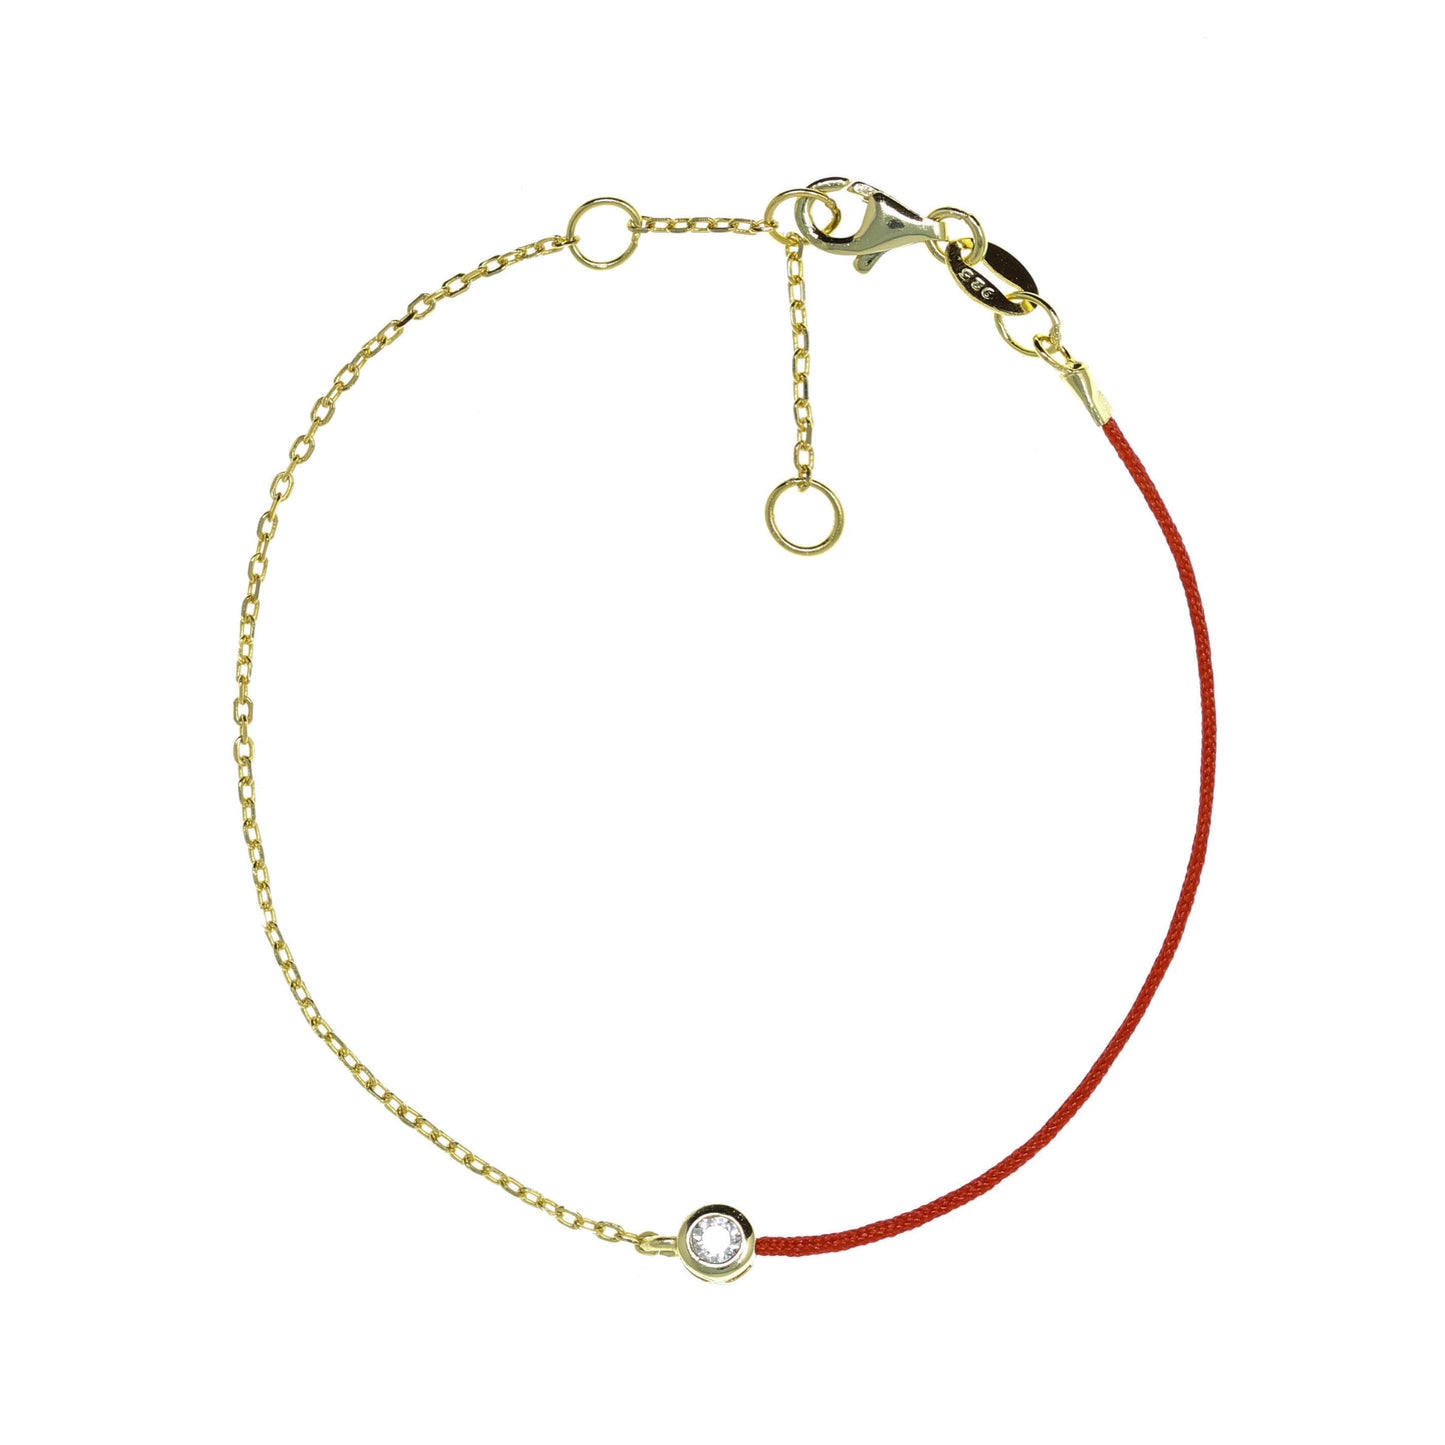 BF-2/GR - Chain and String Bracelet